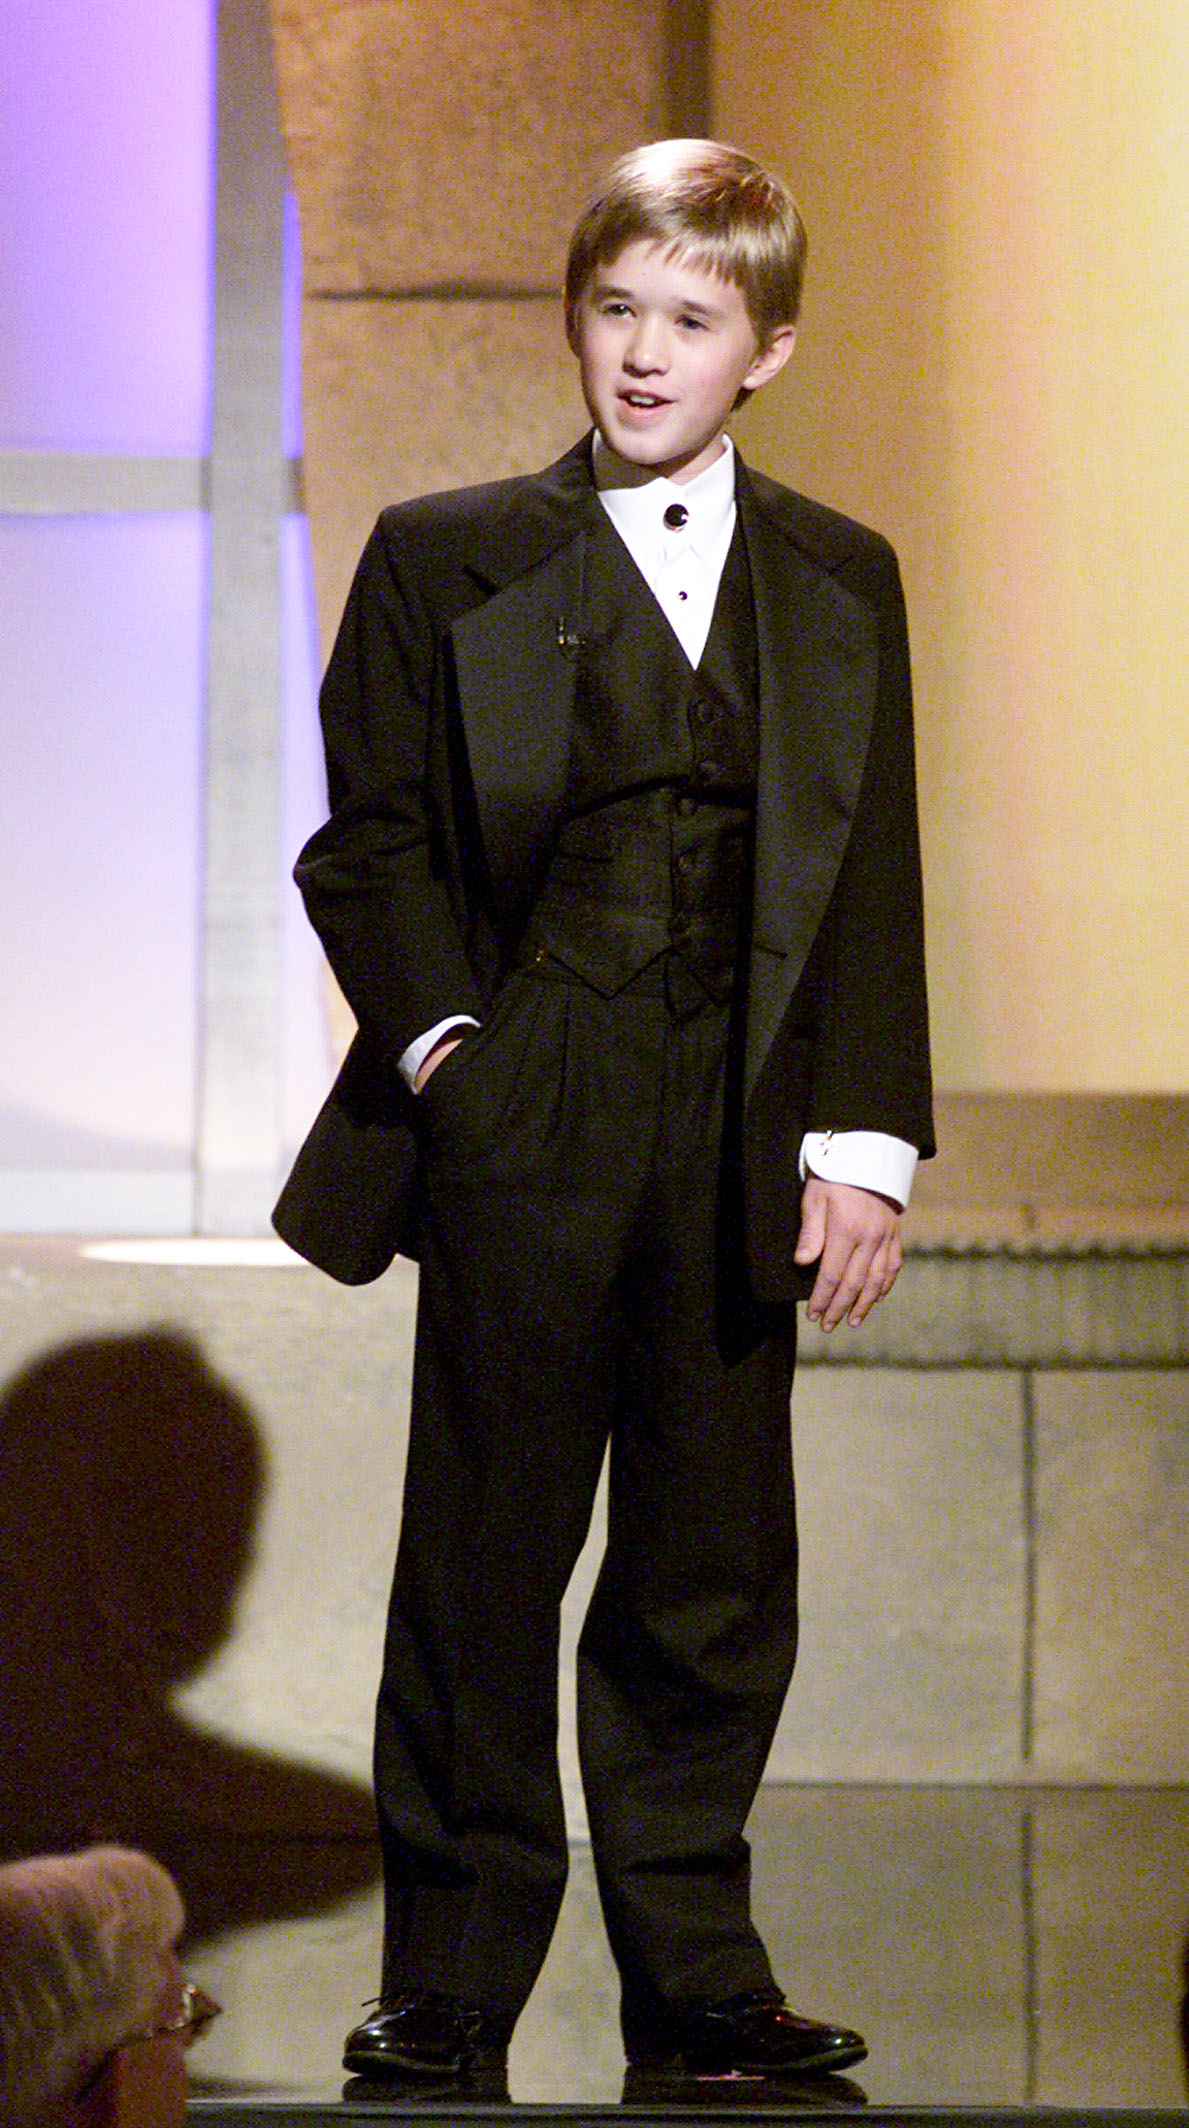 Haley Joel Osment en "Hollywood Salutes Bruce Willis: An American Cinematheque Tribute" en el Hotel Beverly Hilton el 23 de septiembre de 2000 en Beverly Hills, California. | Fuente: Getty Images